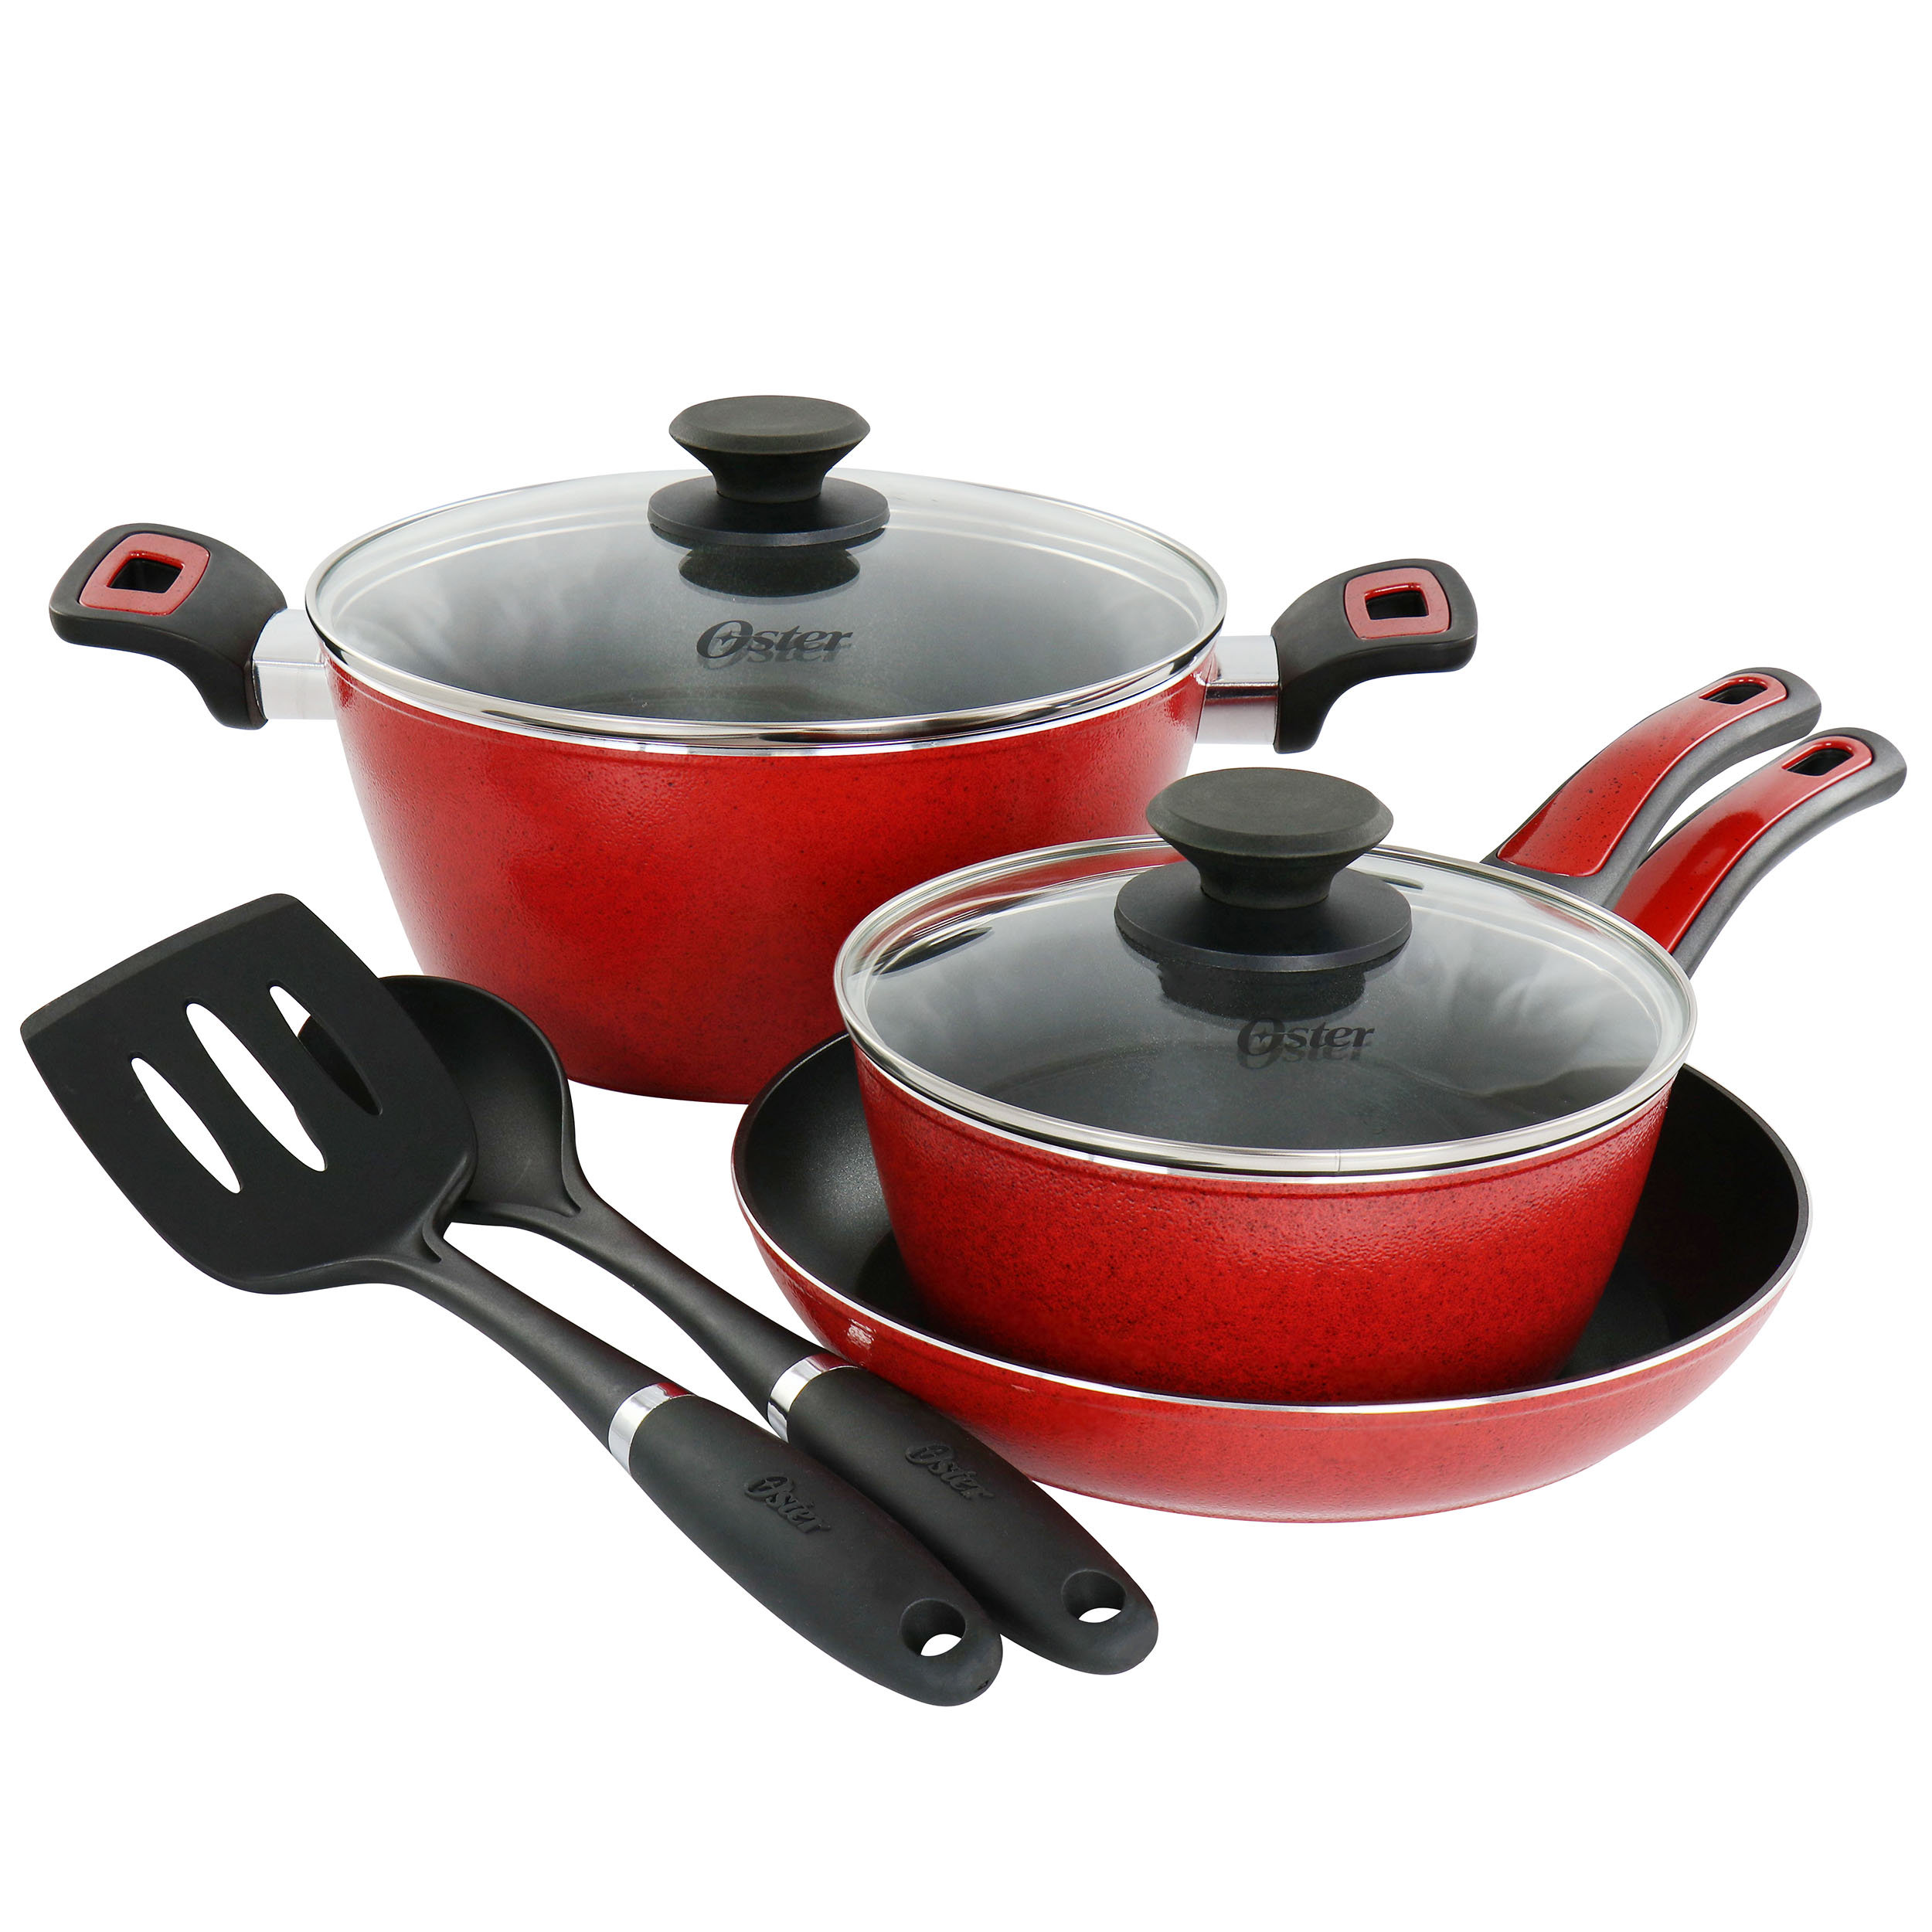 Buy BALLARINI Arezzo Pots and pans set  Pots and pans sets, Cookware set,  Pan set